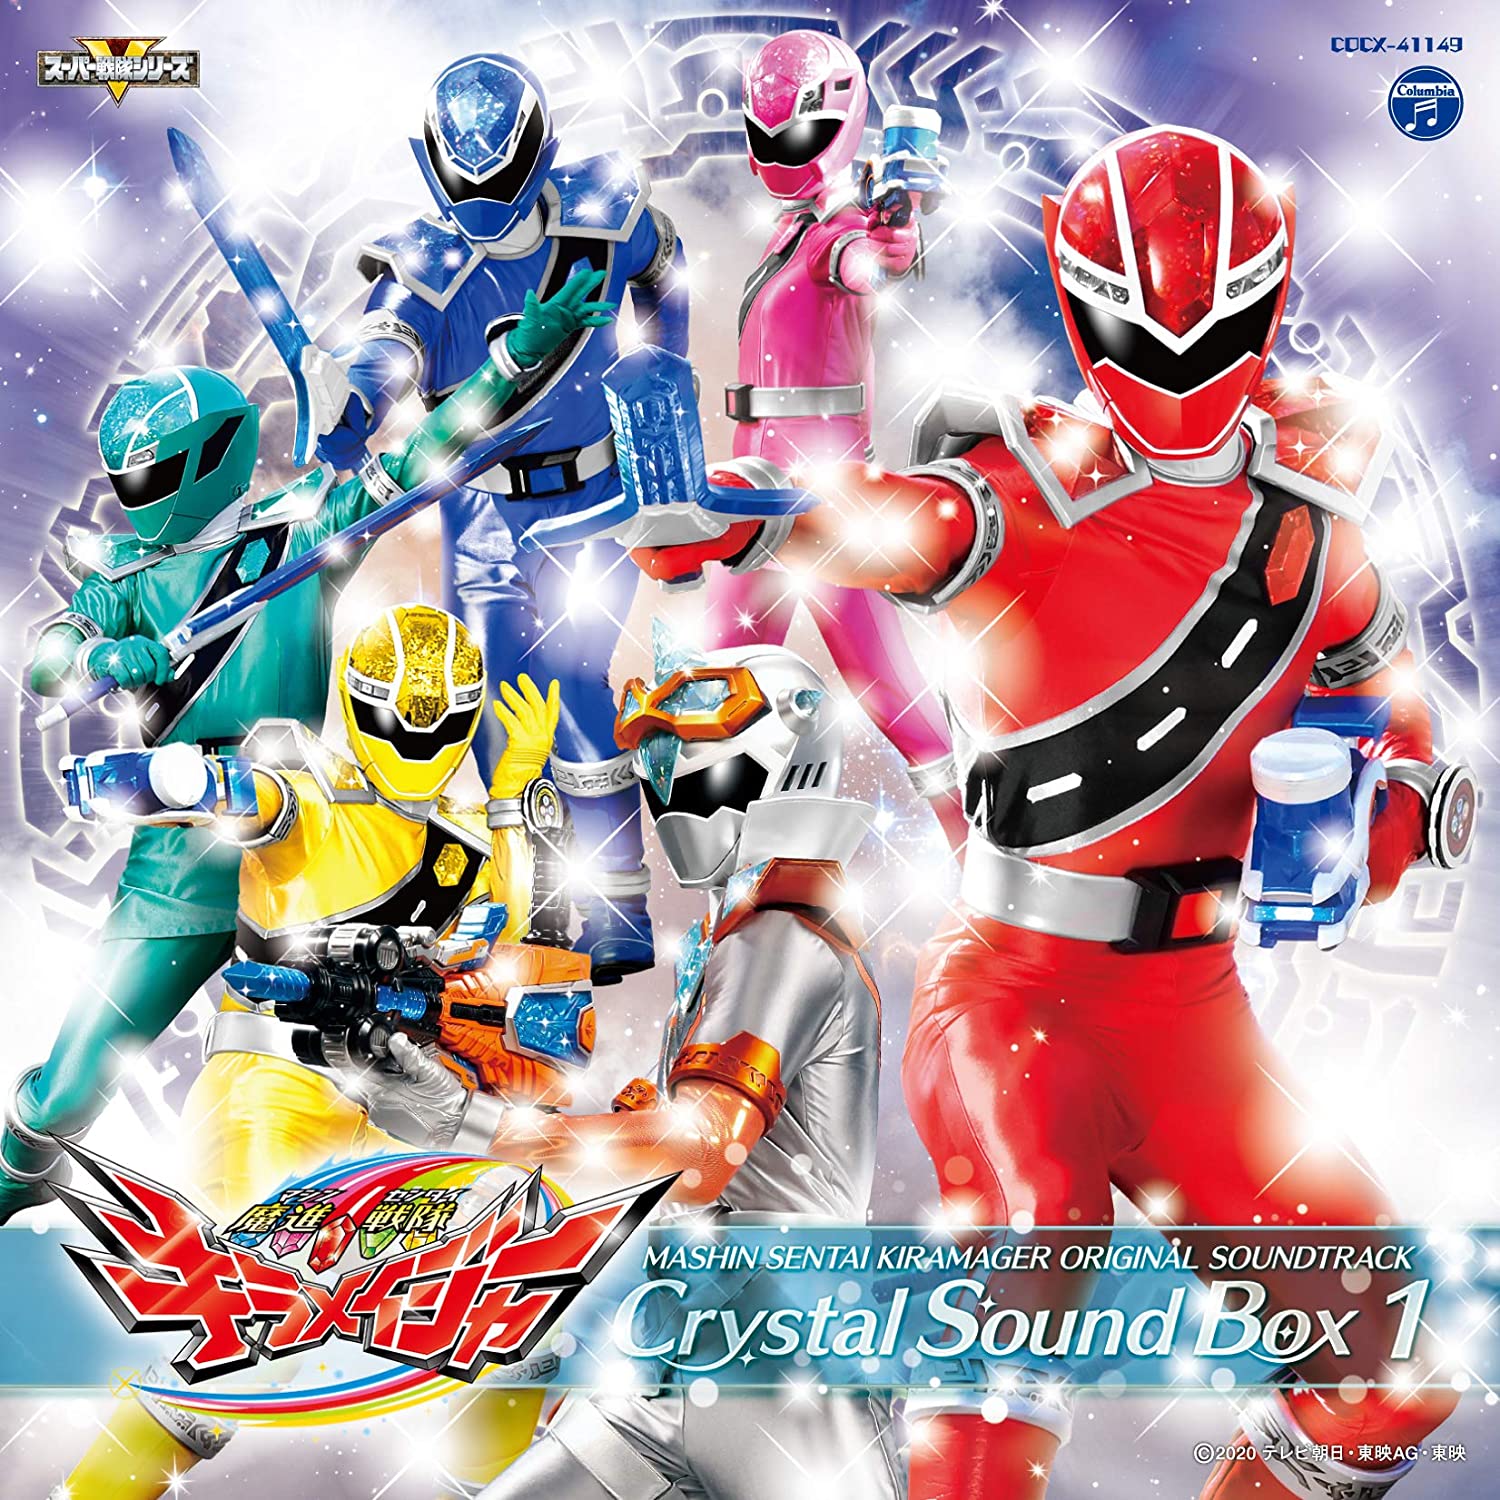 Mashin Sentai Kiramager Soundtracks | RangerWiki | Fandom